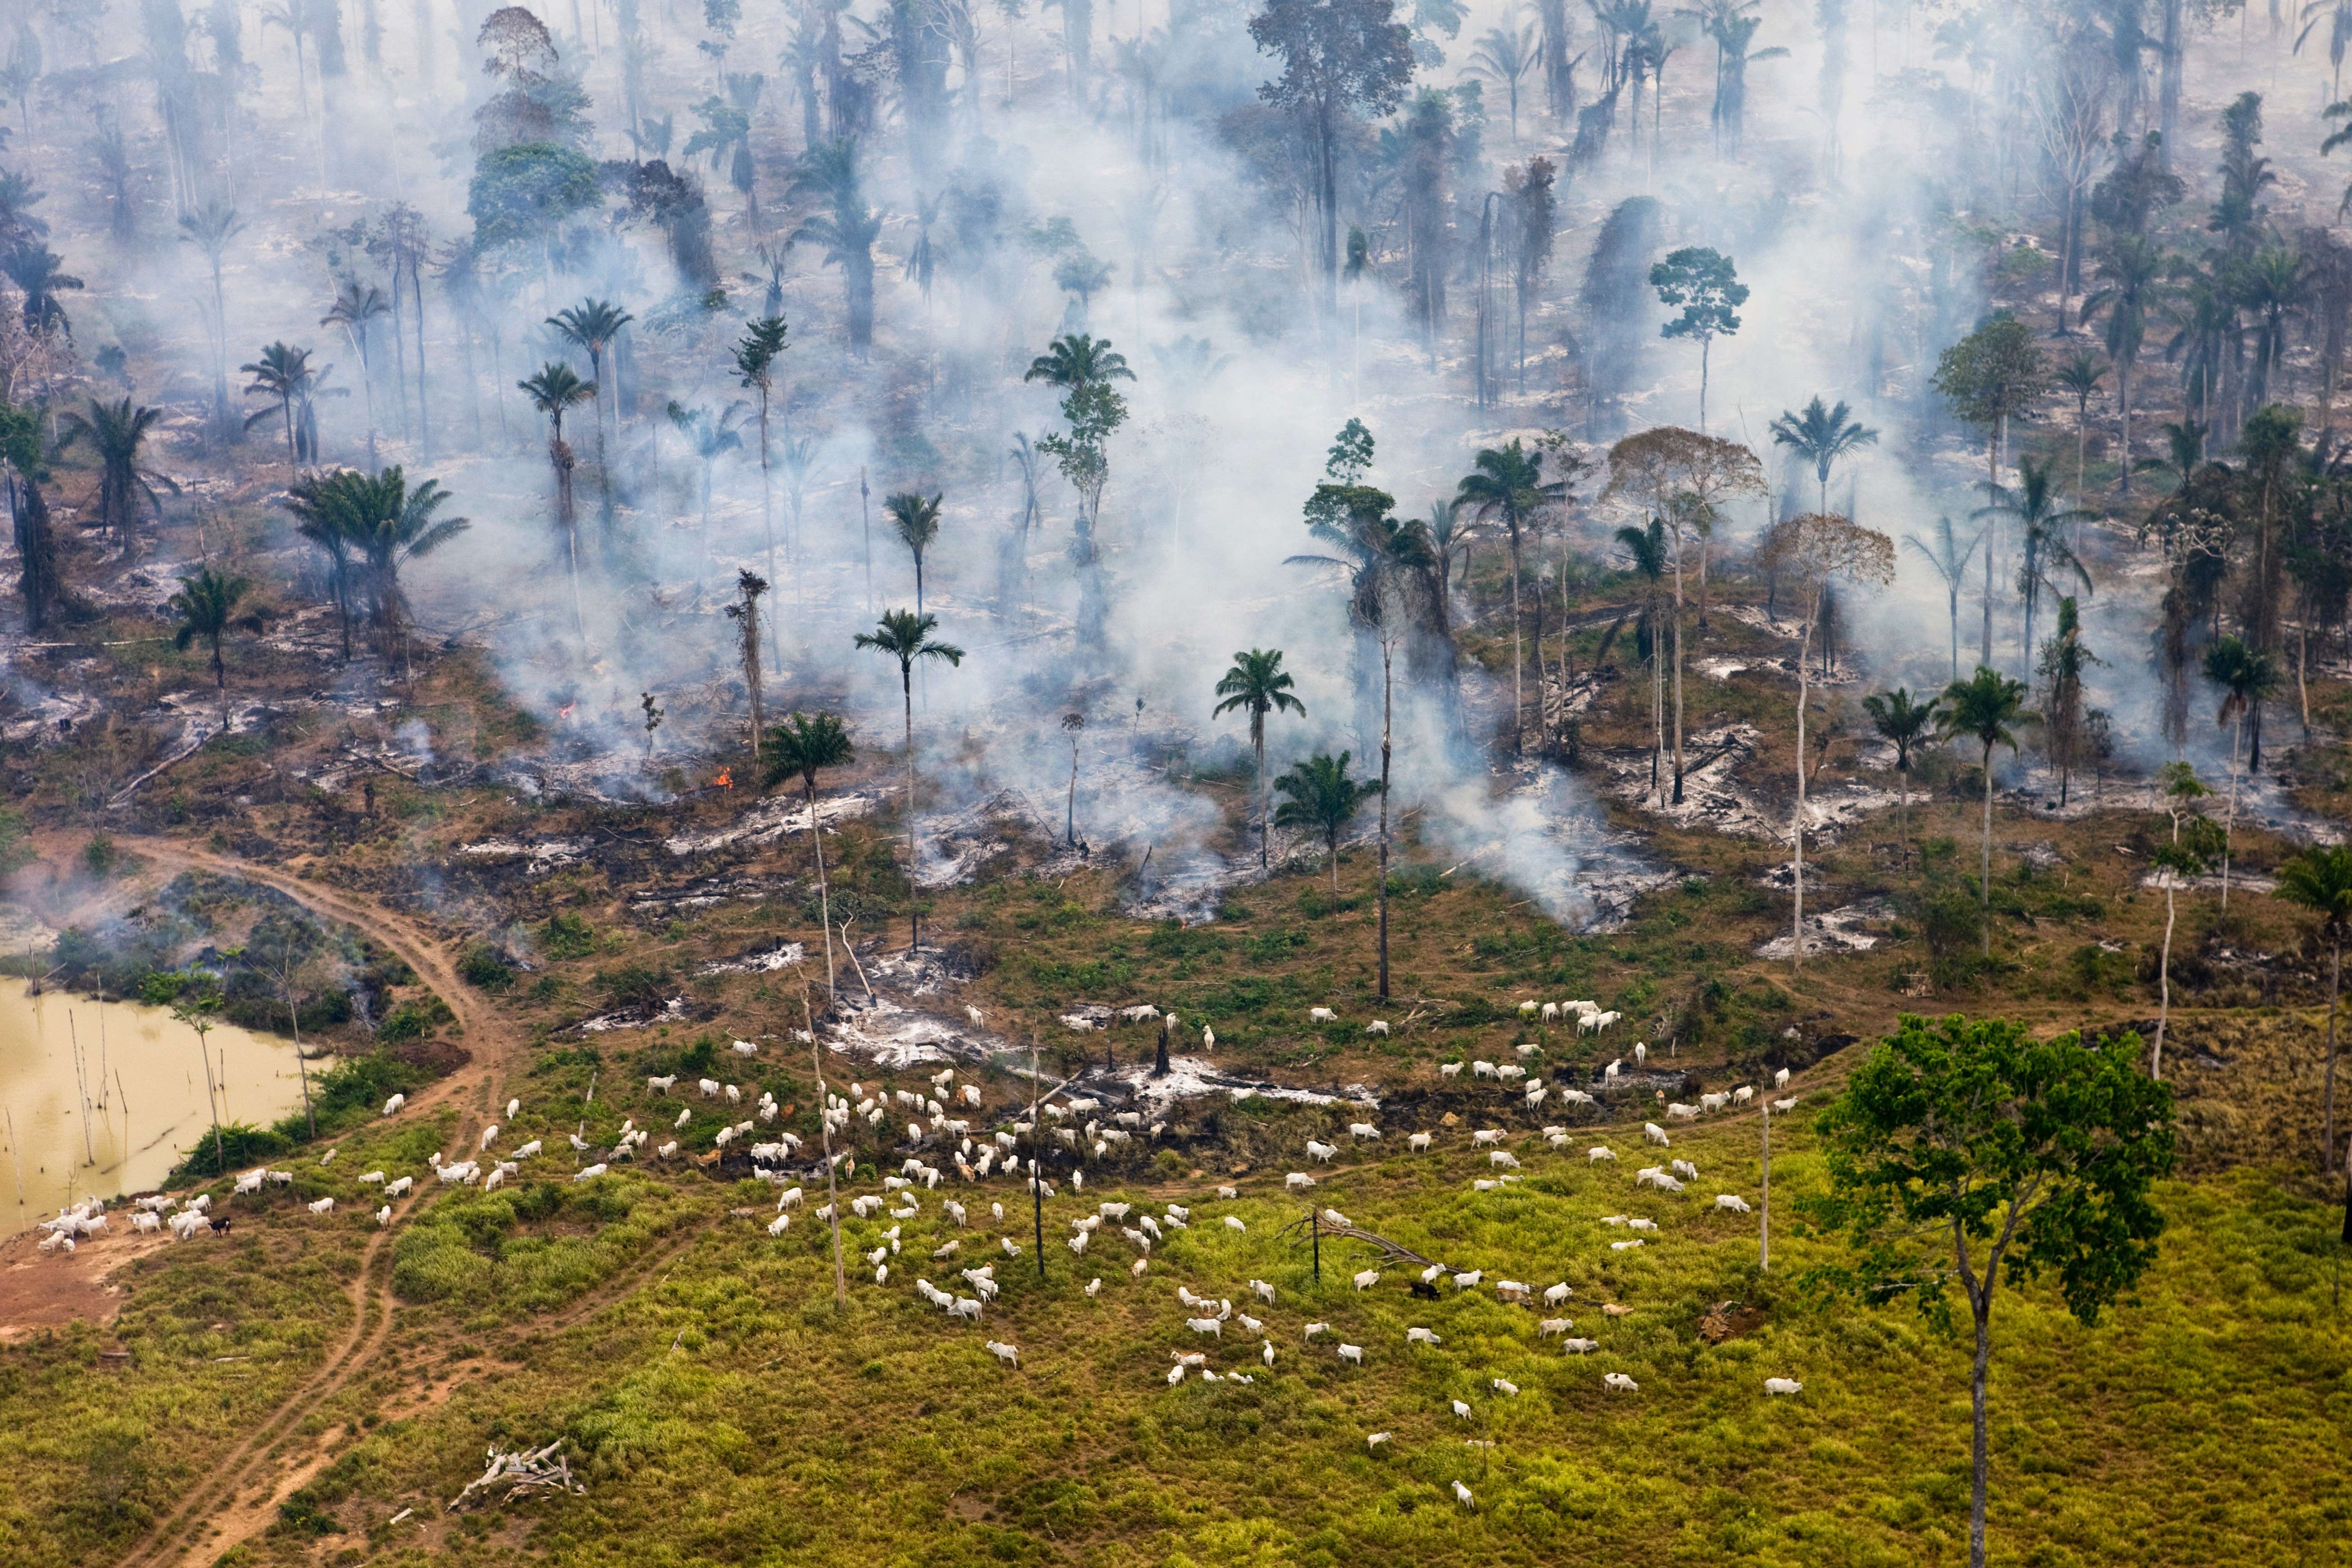 Cattle graze amongst burning Amazon jungle in Brazil. Since 1978, over